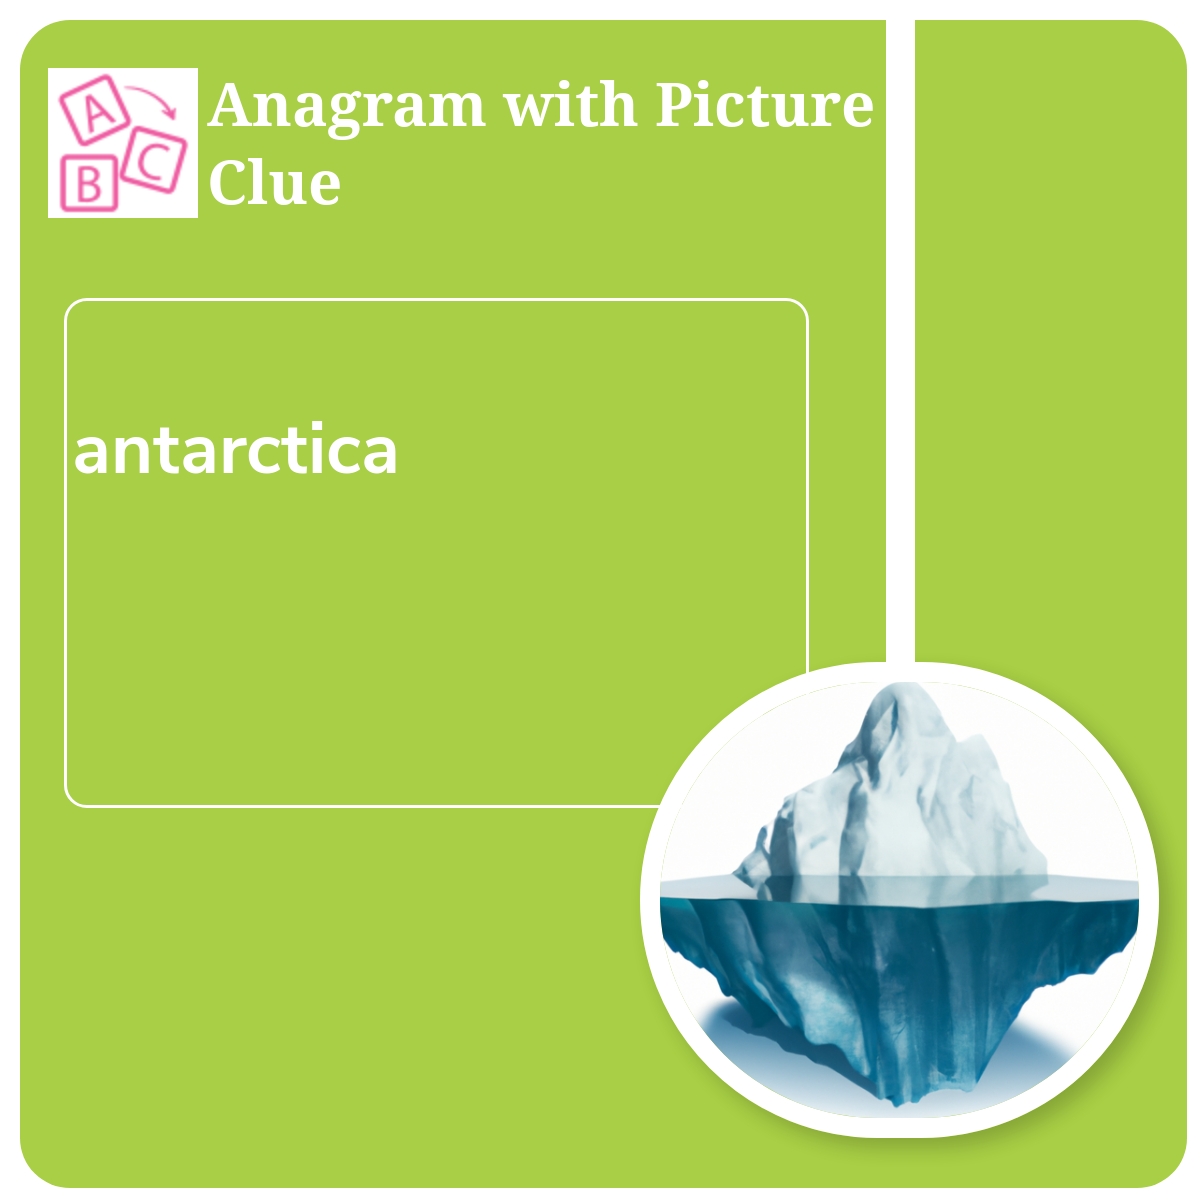 Anagram With Picture Clue: Antarctica